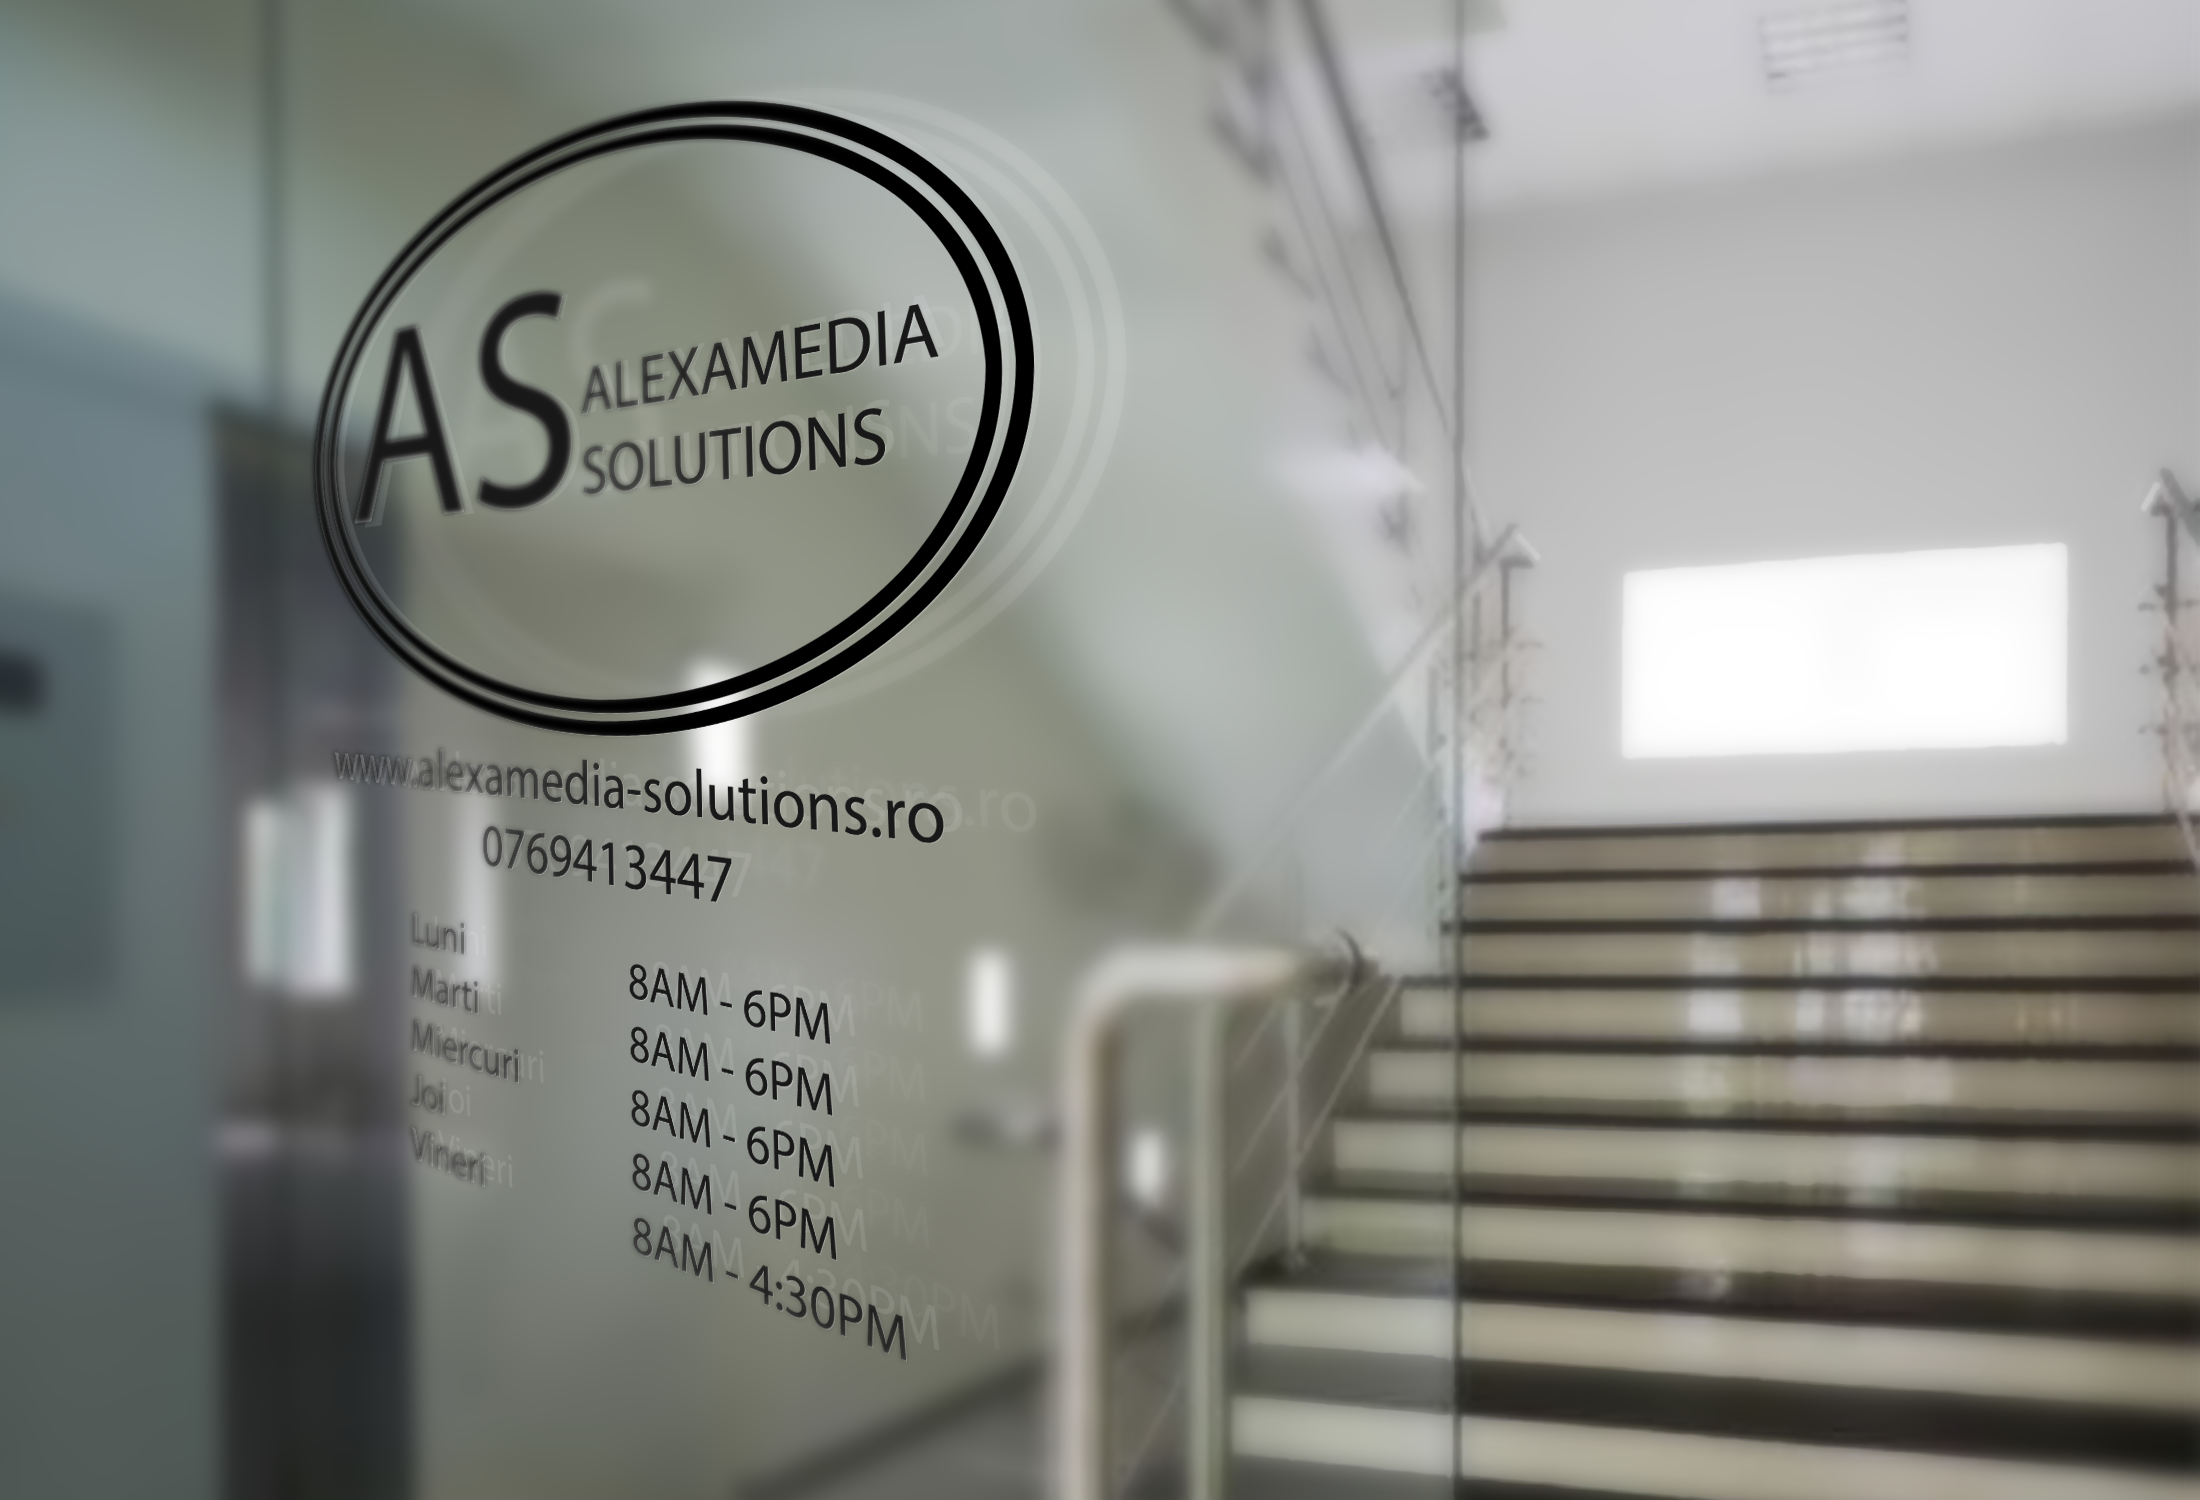 https://alexamedia.solutions/wp-content/uploads/2021/03/Window-Signage-ALEXAMEDIA-SOLUTIONS.png